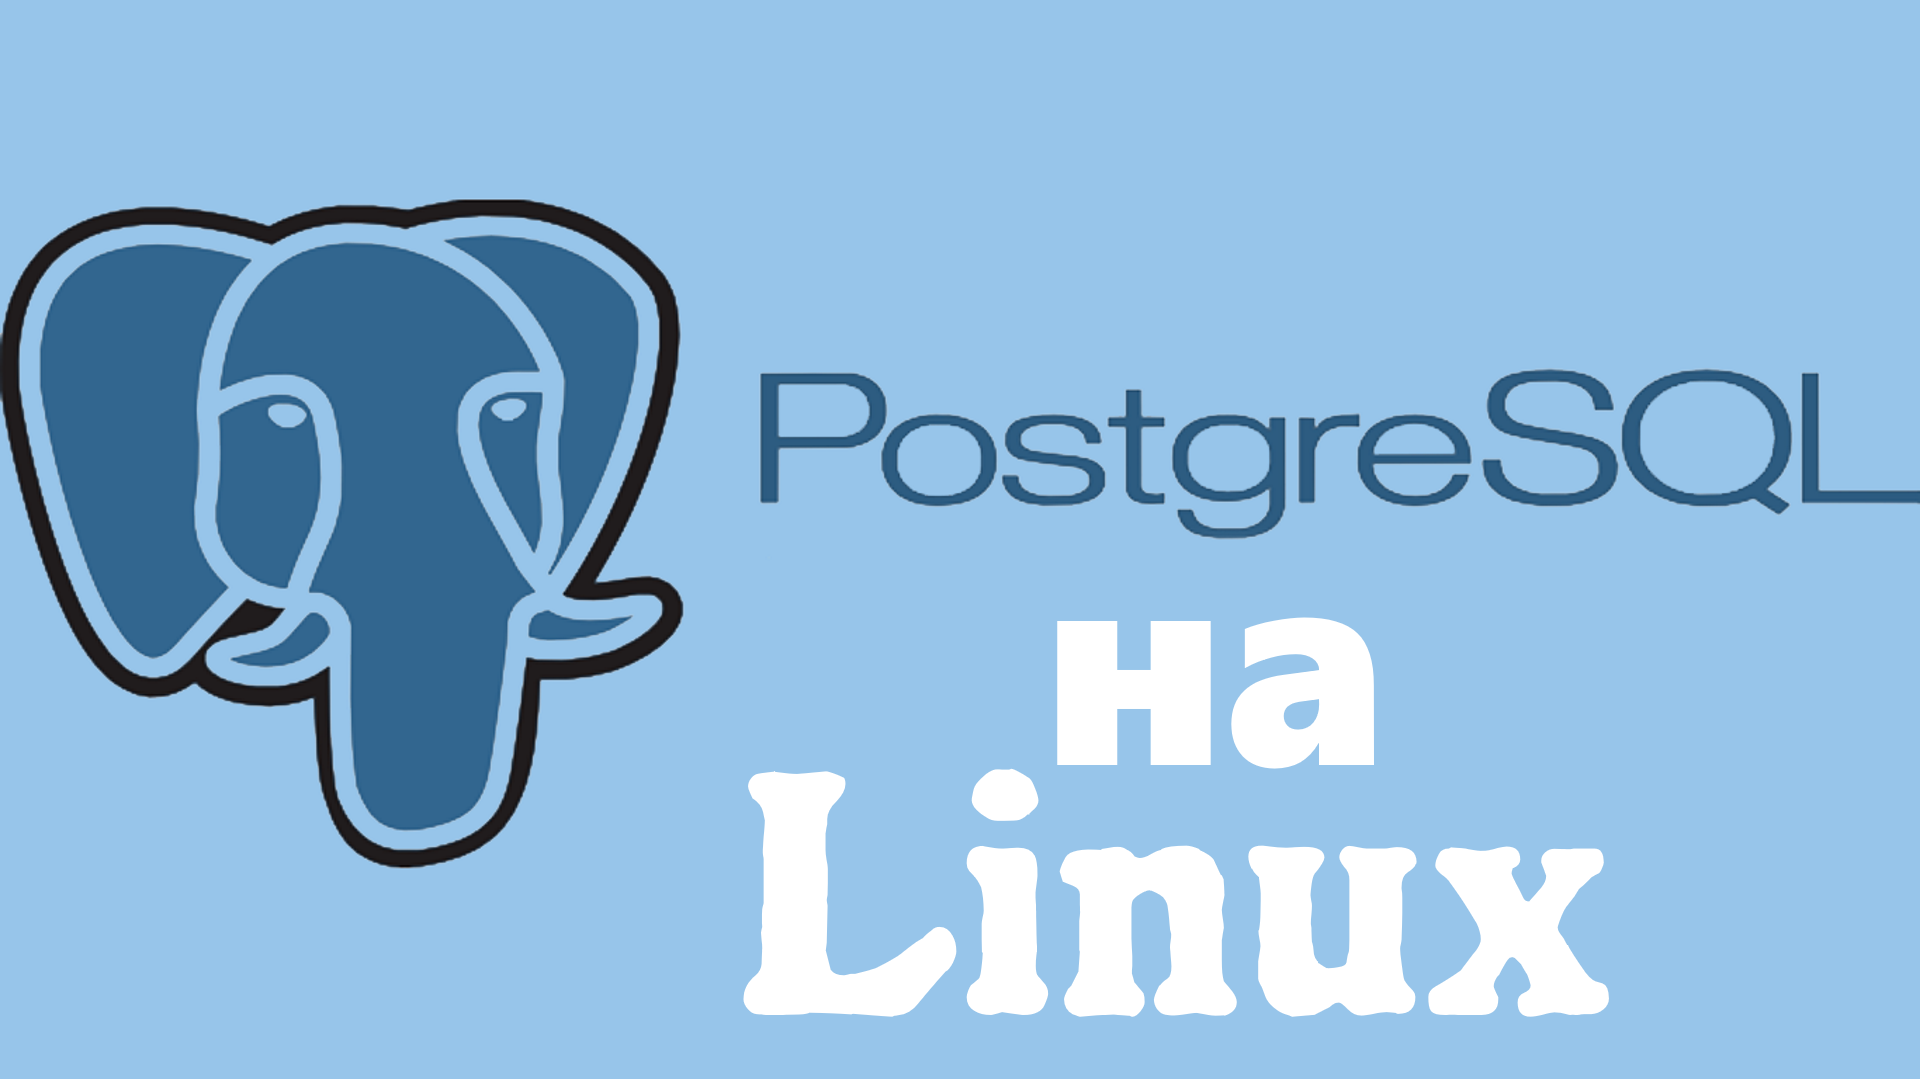 [База Данных]Установка PostgreSql на Linux (xubuntu.Ubuntu) Гайд